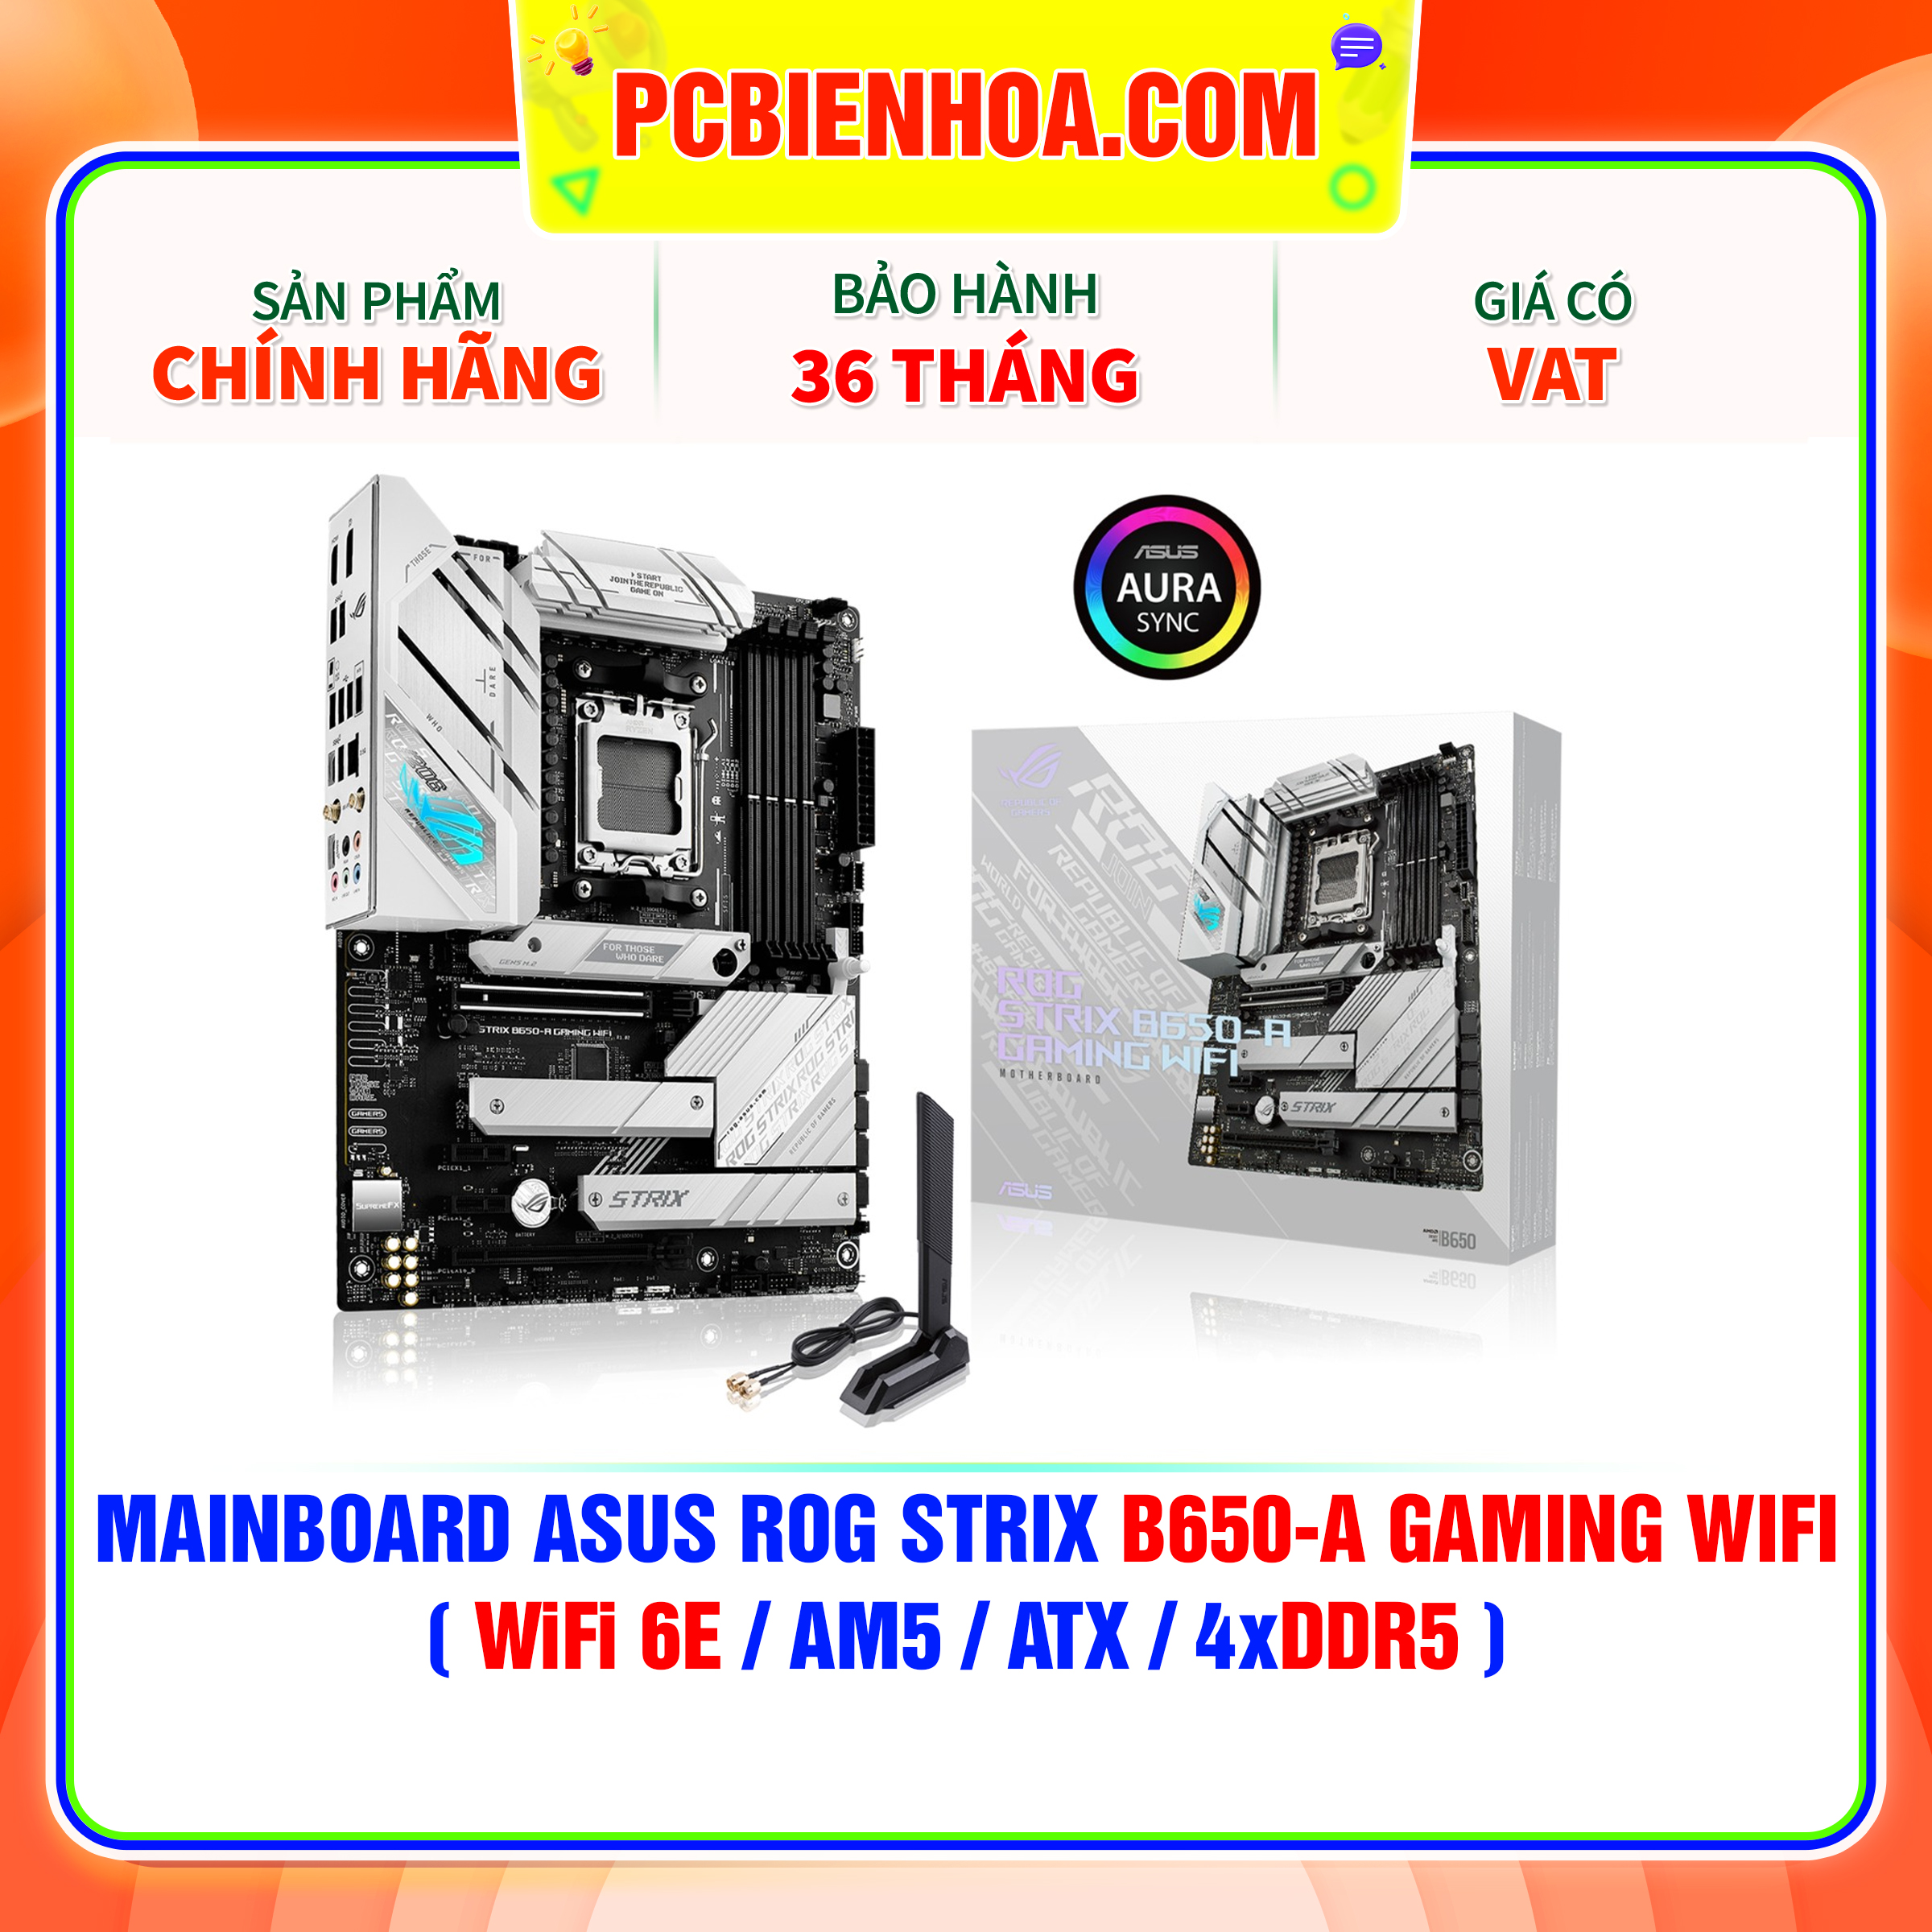 MAINBOARD ASUS ROG STRIX B650-A GAMING WIFI  WiFi 6E AM5 ATX 4xDDR5